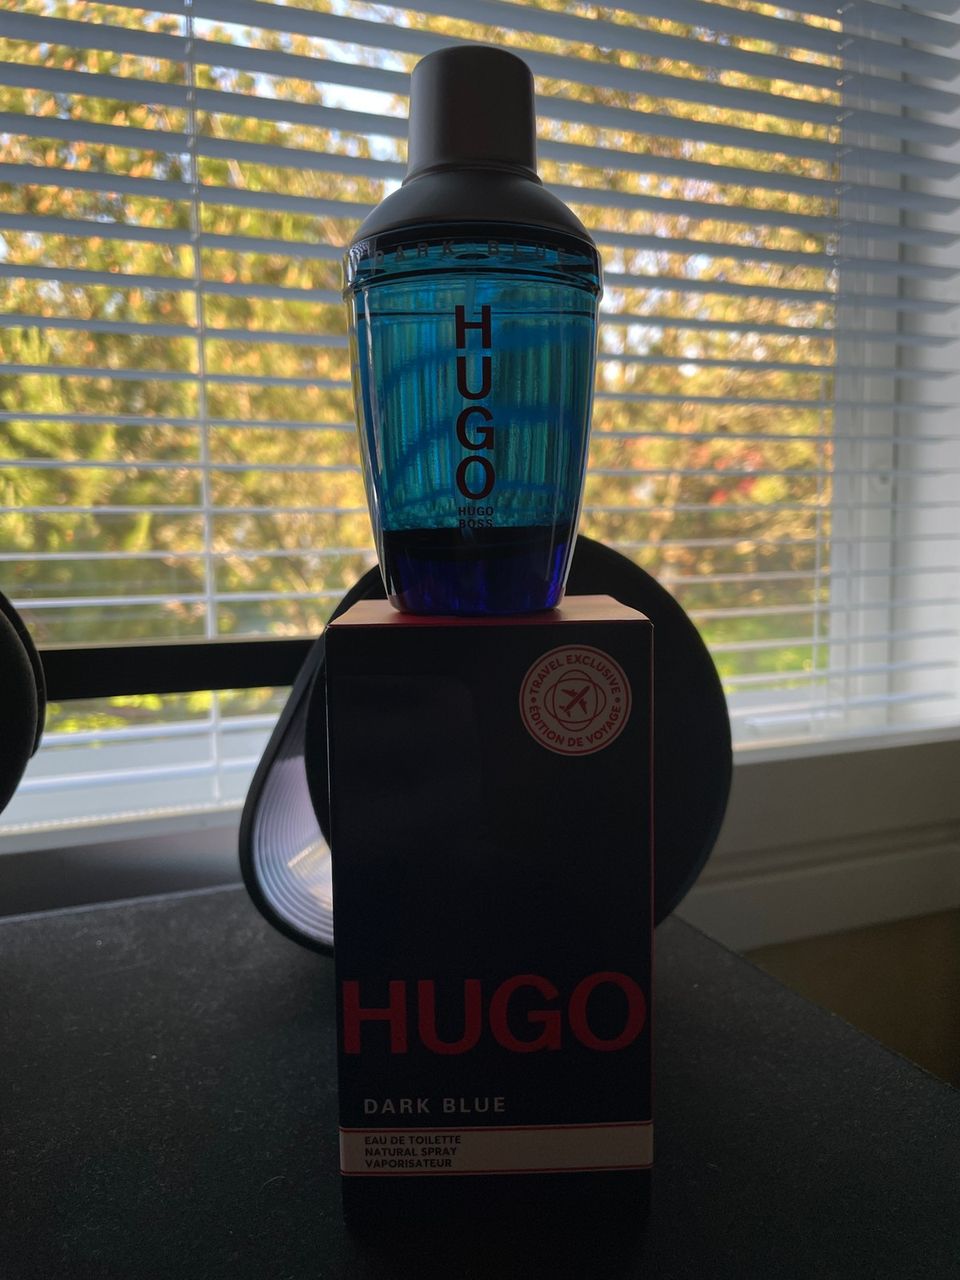 Hugo Dark Blue 75ml